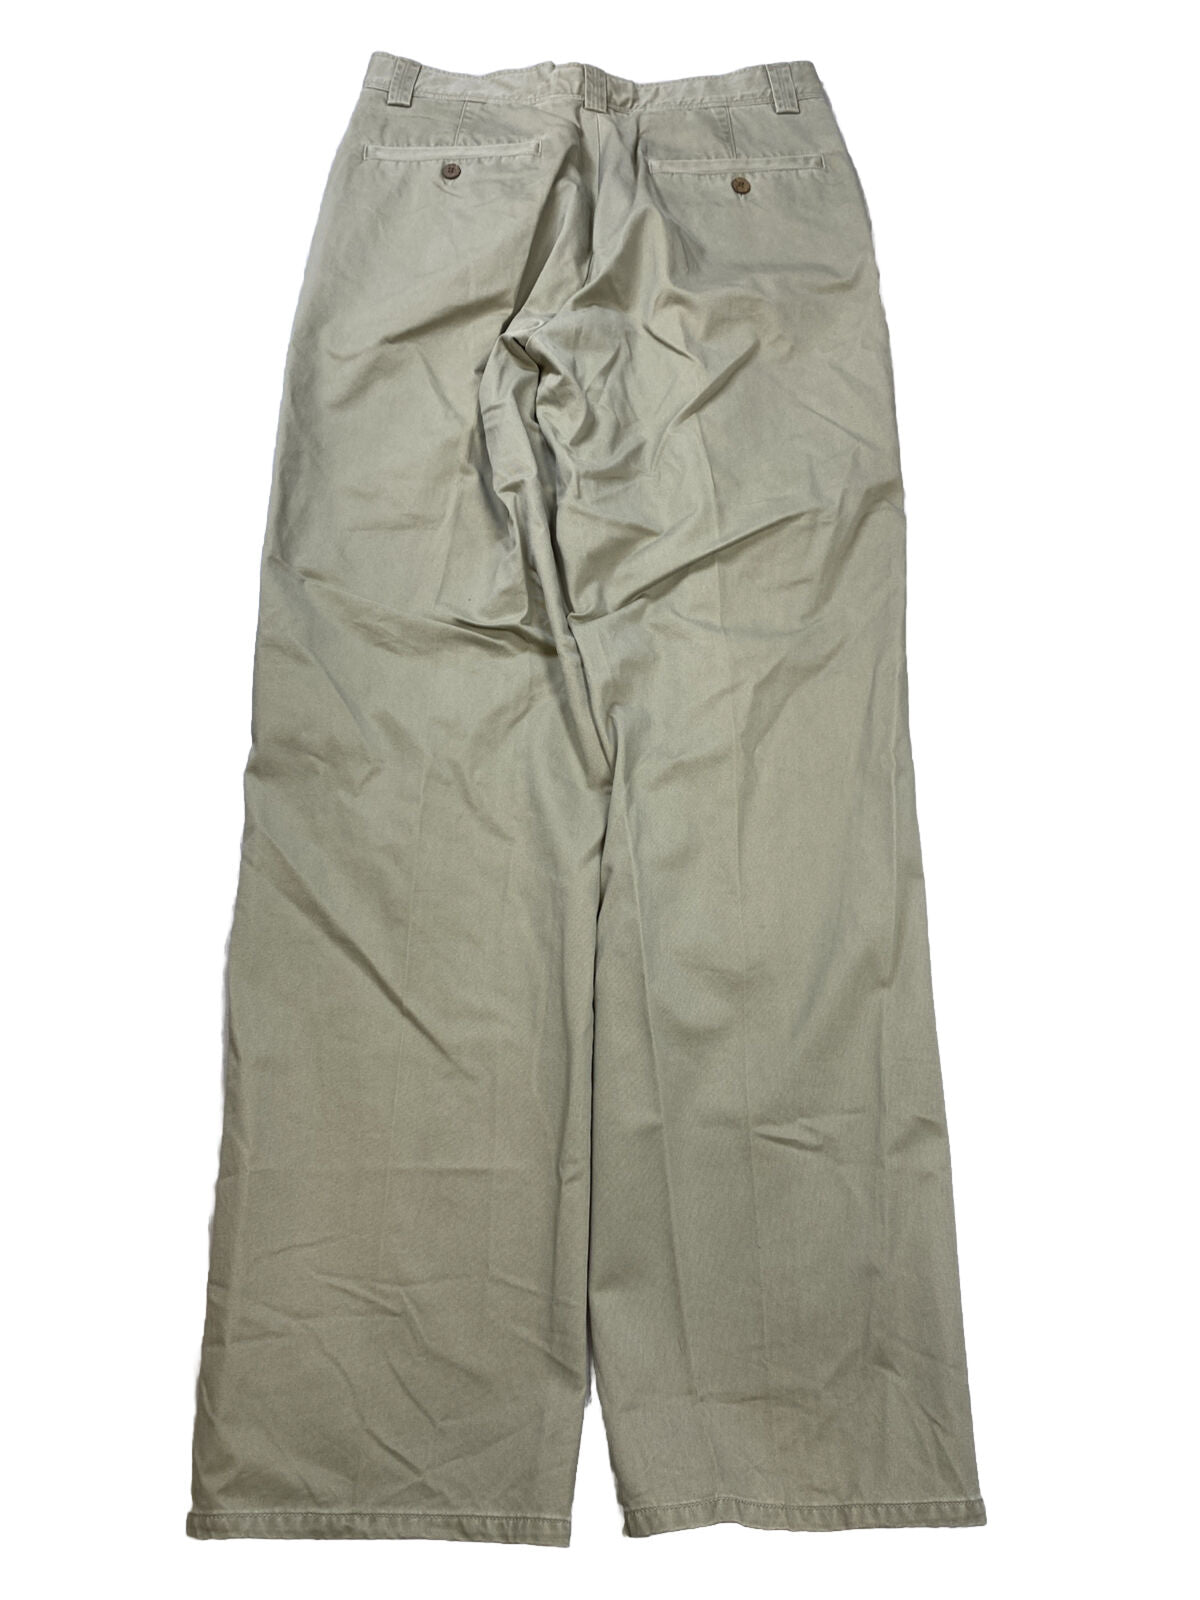 NEW Tommy Bahama Men's Beige Cotton Pleated Khaki Chino Pants - 32